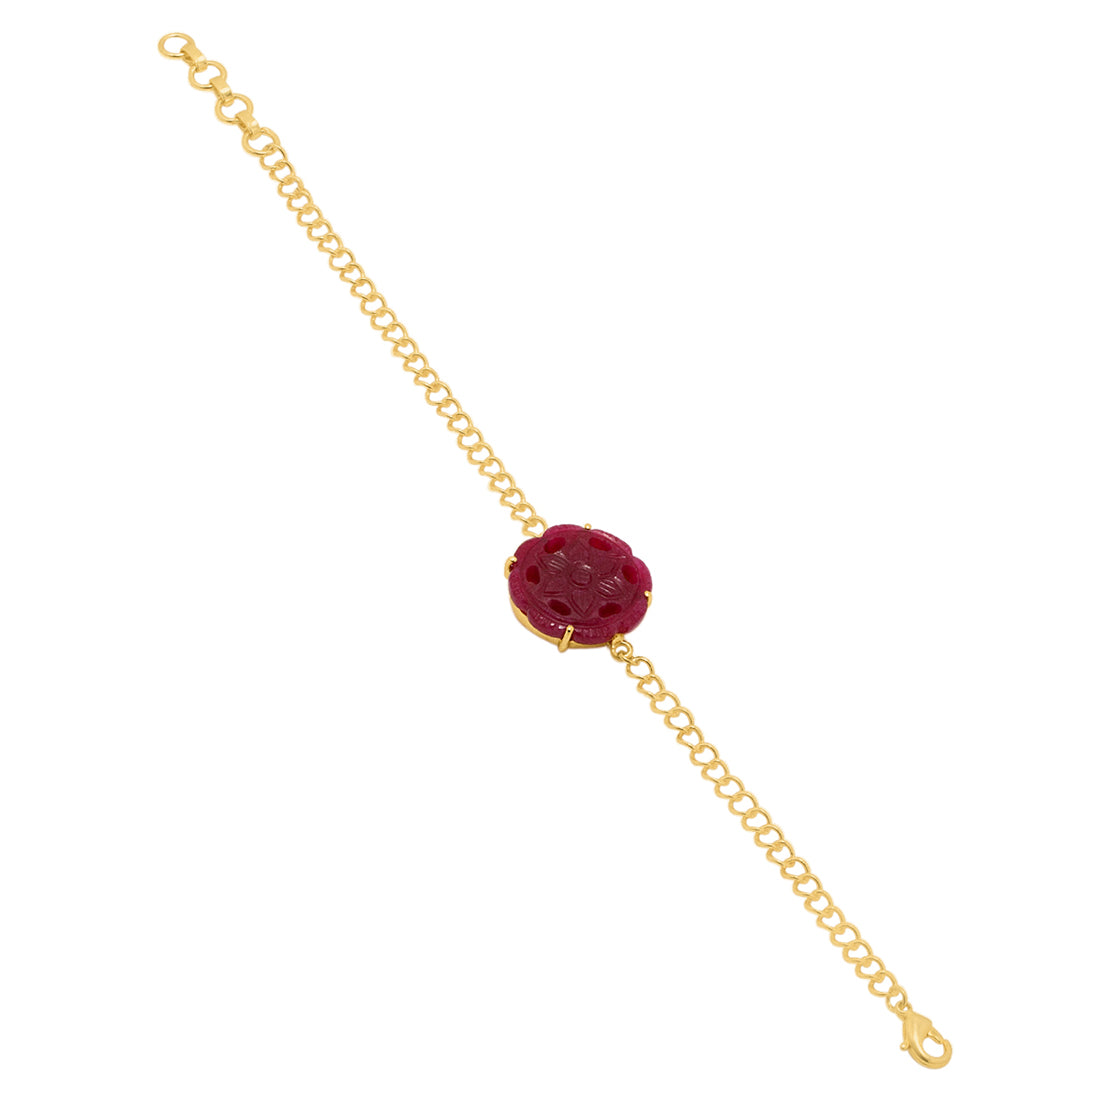 Radiant Golden Bracelet with Carved Red Stone